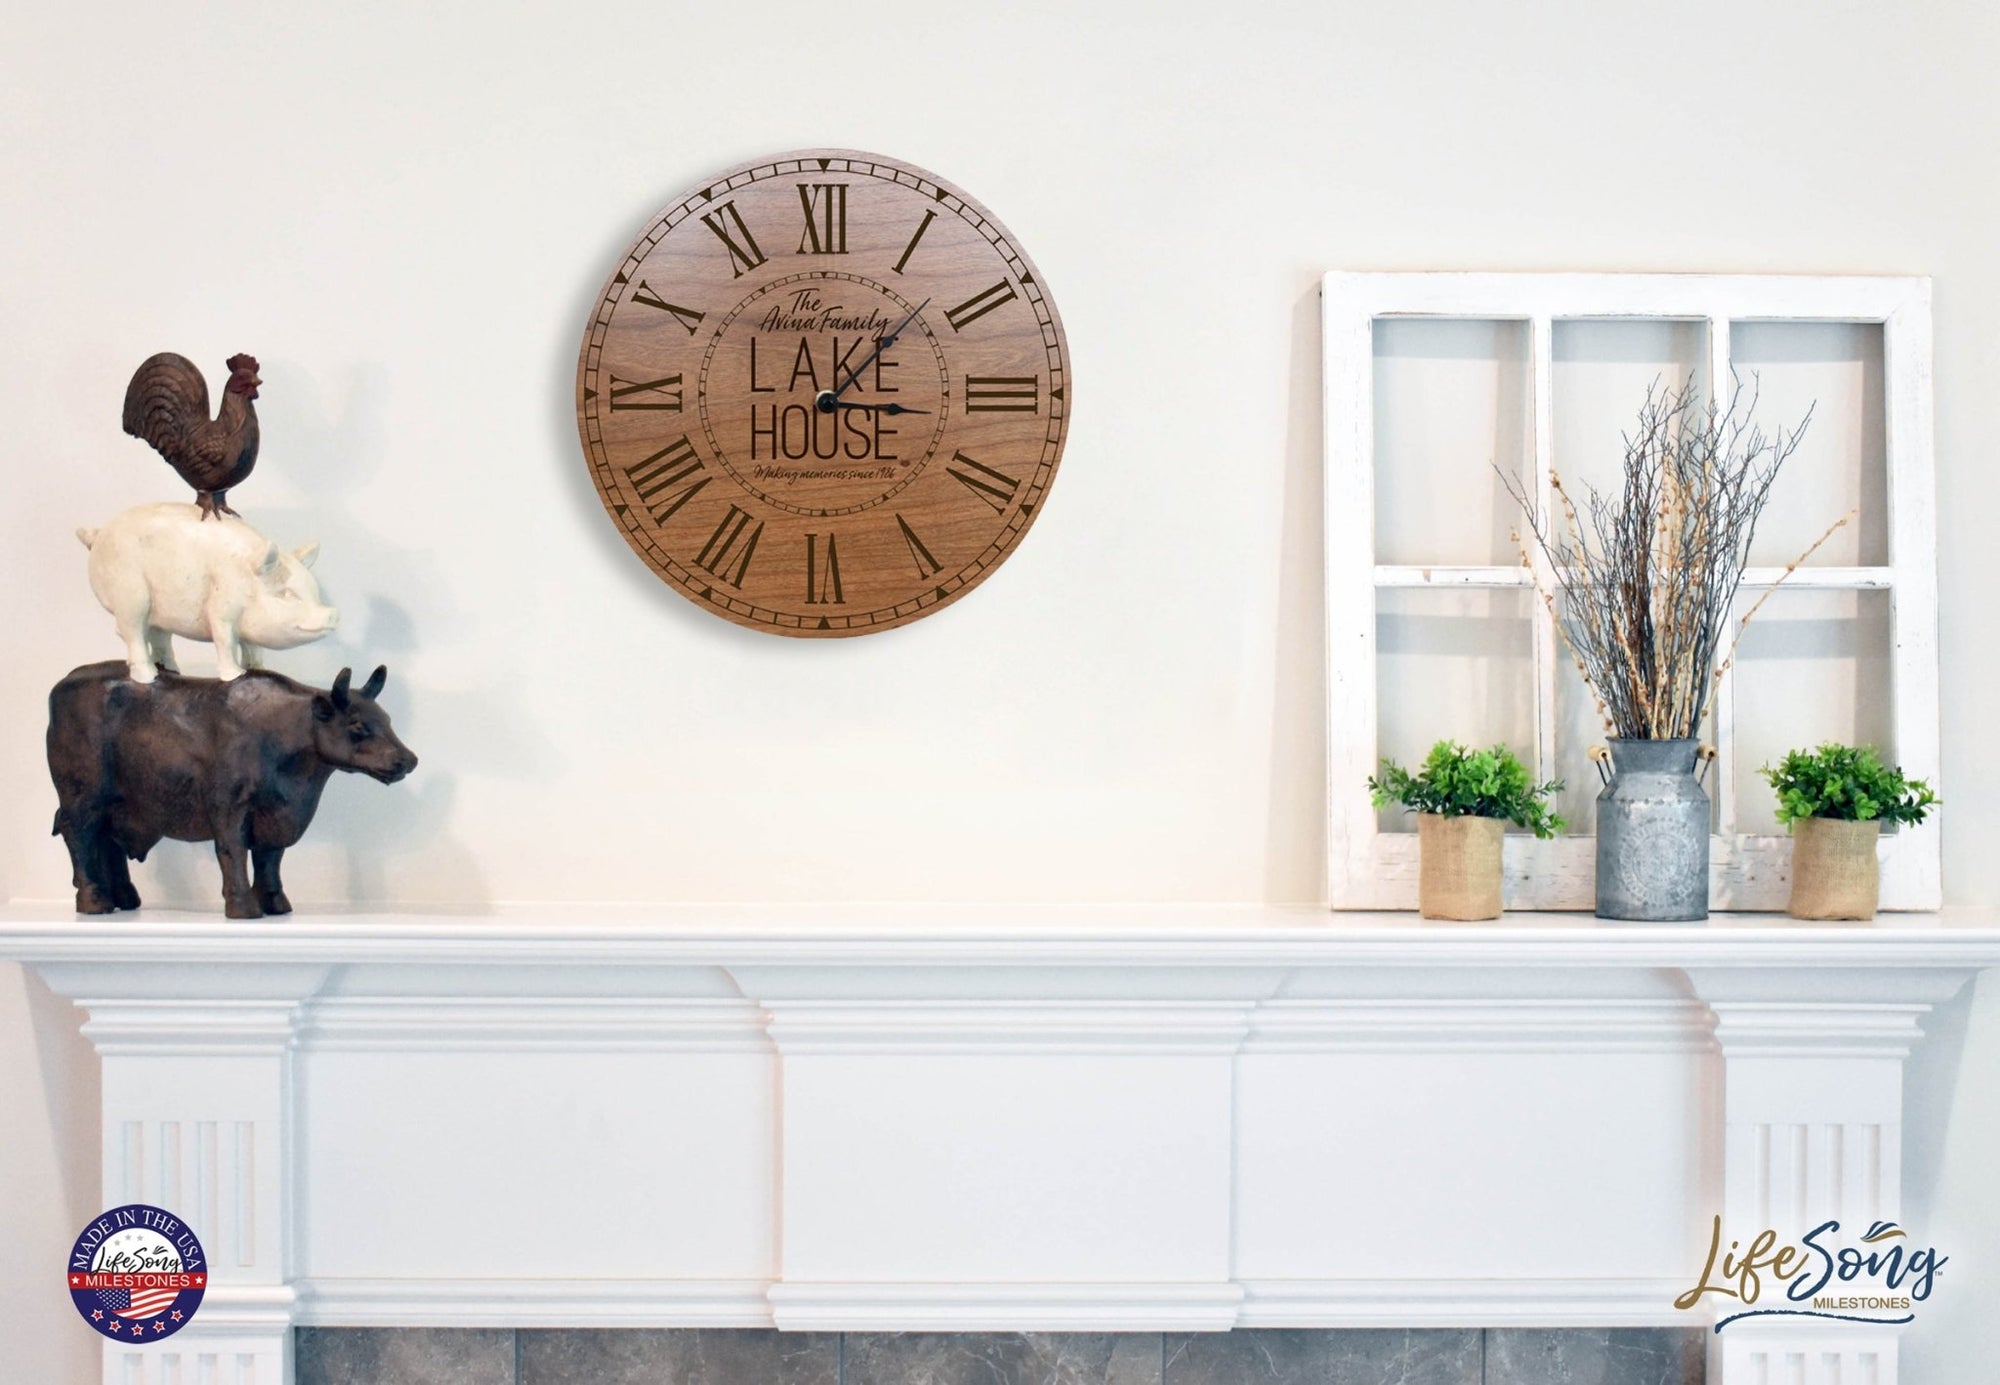 Custom Everyday Home and Family Clock 12” x 0.75” Lakehouse Making Memories - LifeSong Milestones